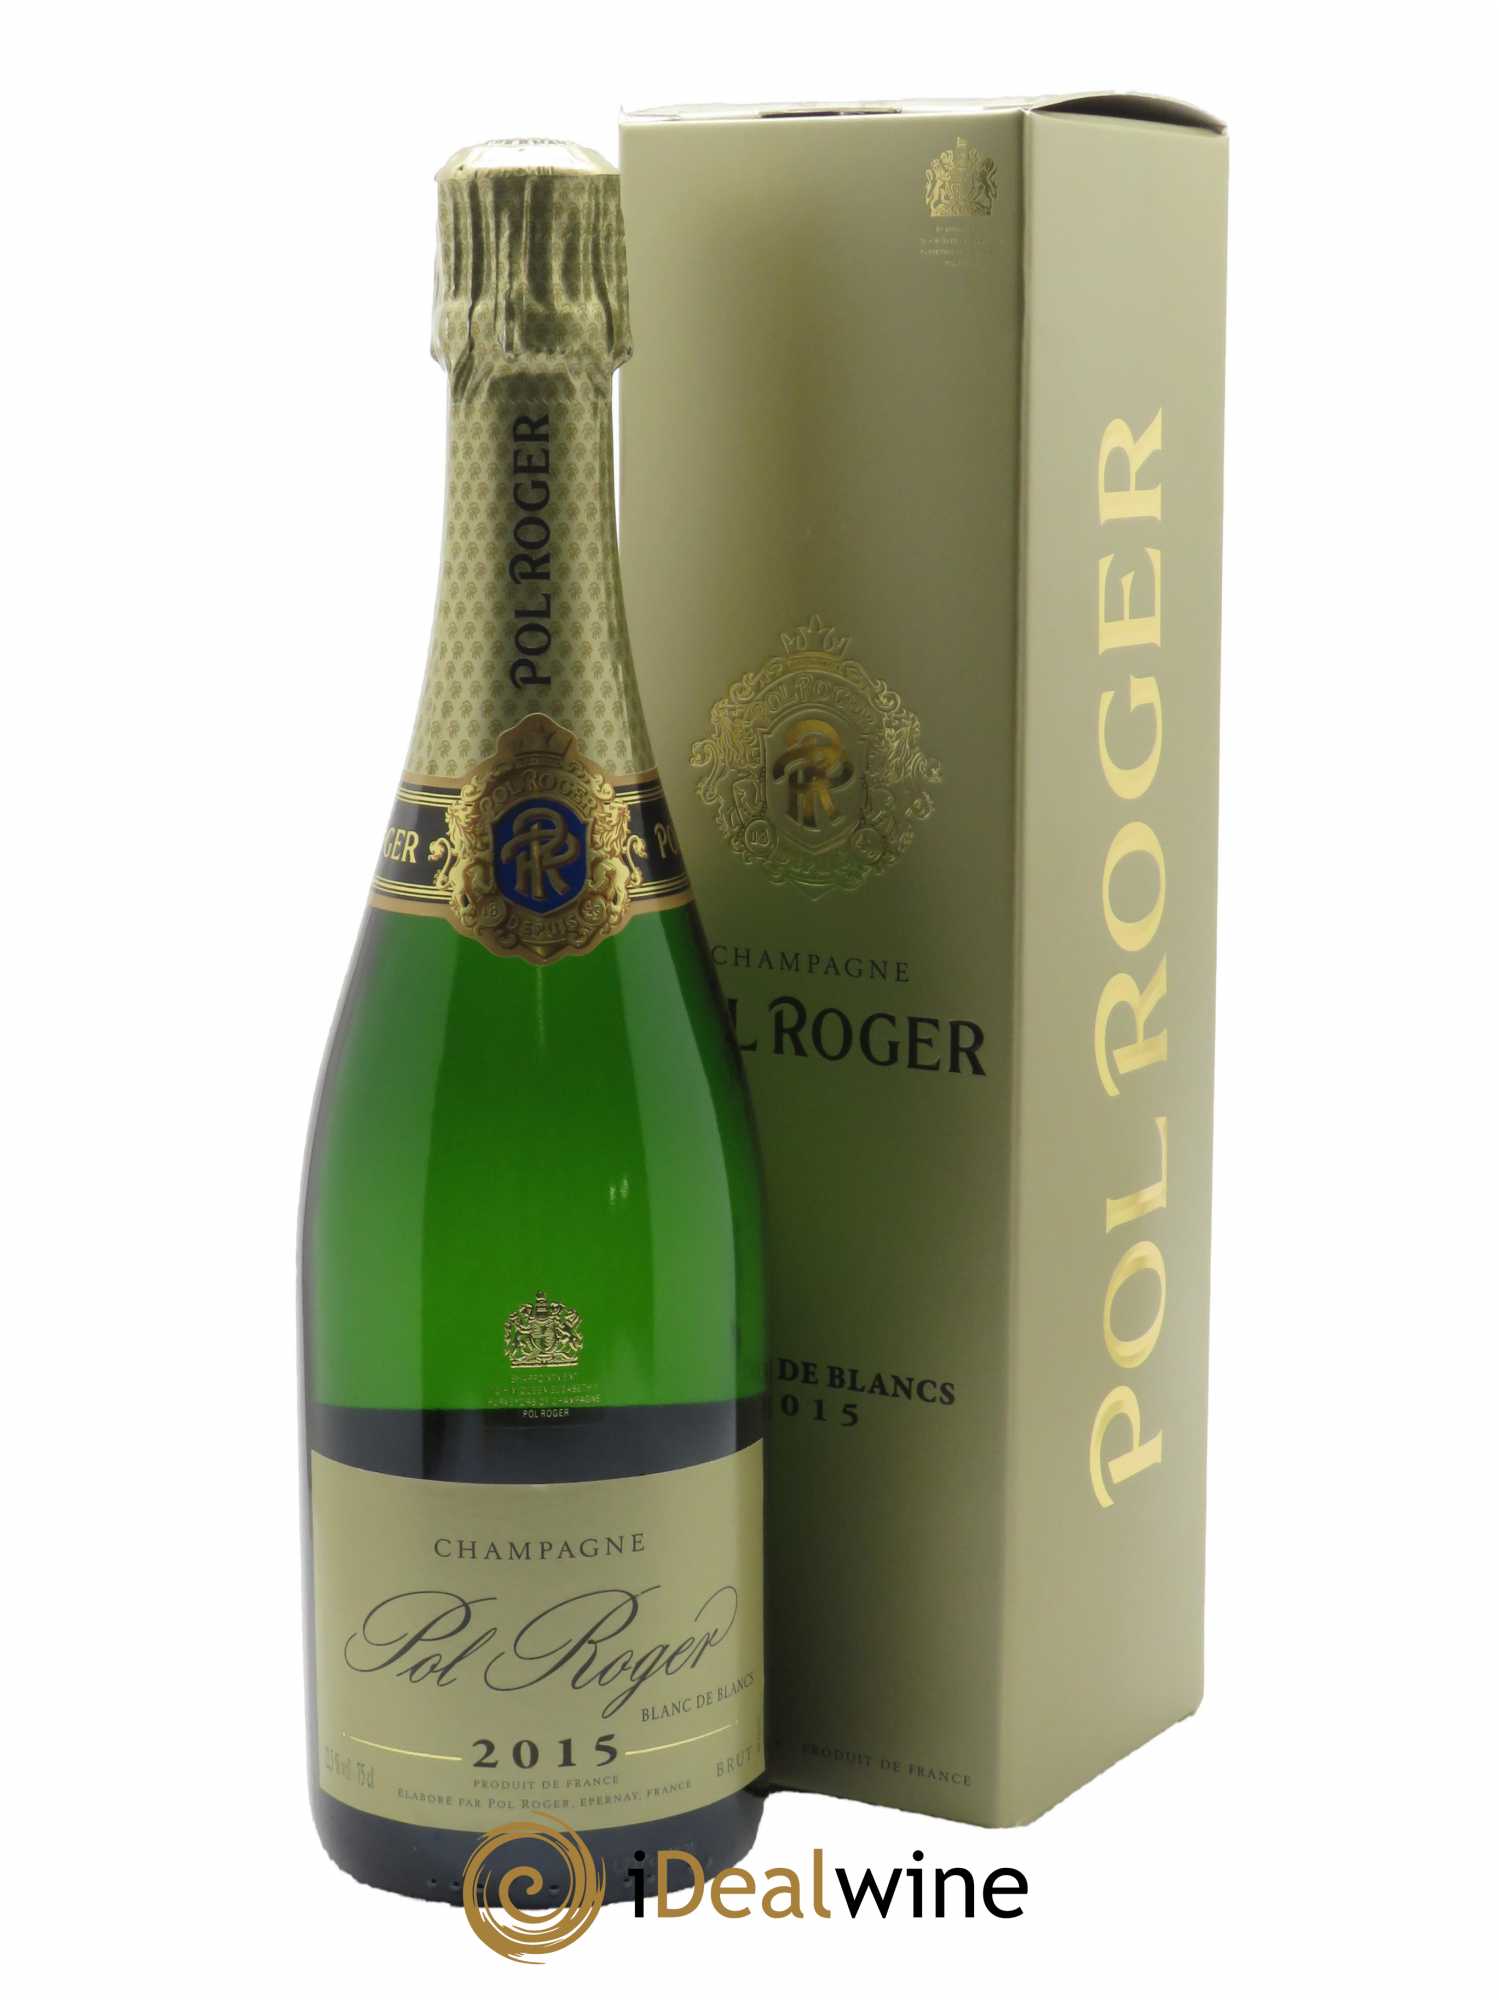 Champagne Pol Roger Blanc de blancs Brut (Blanc effervescent)